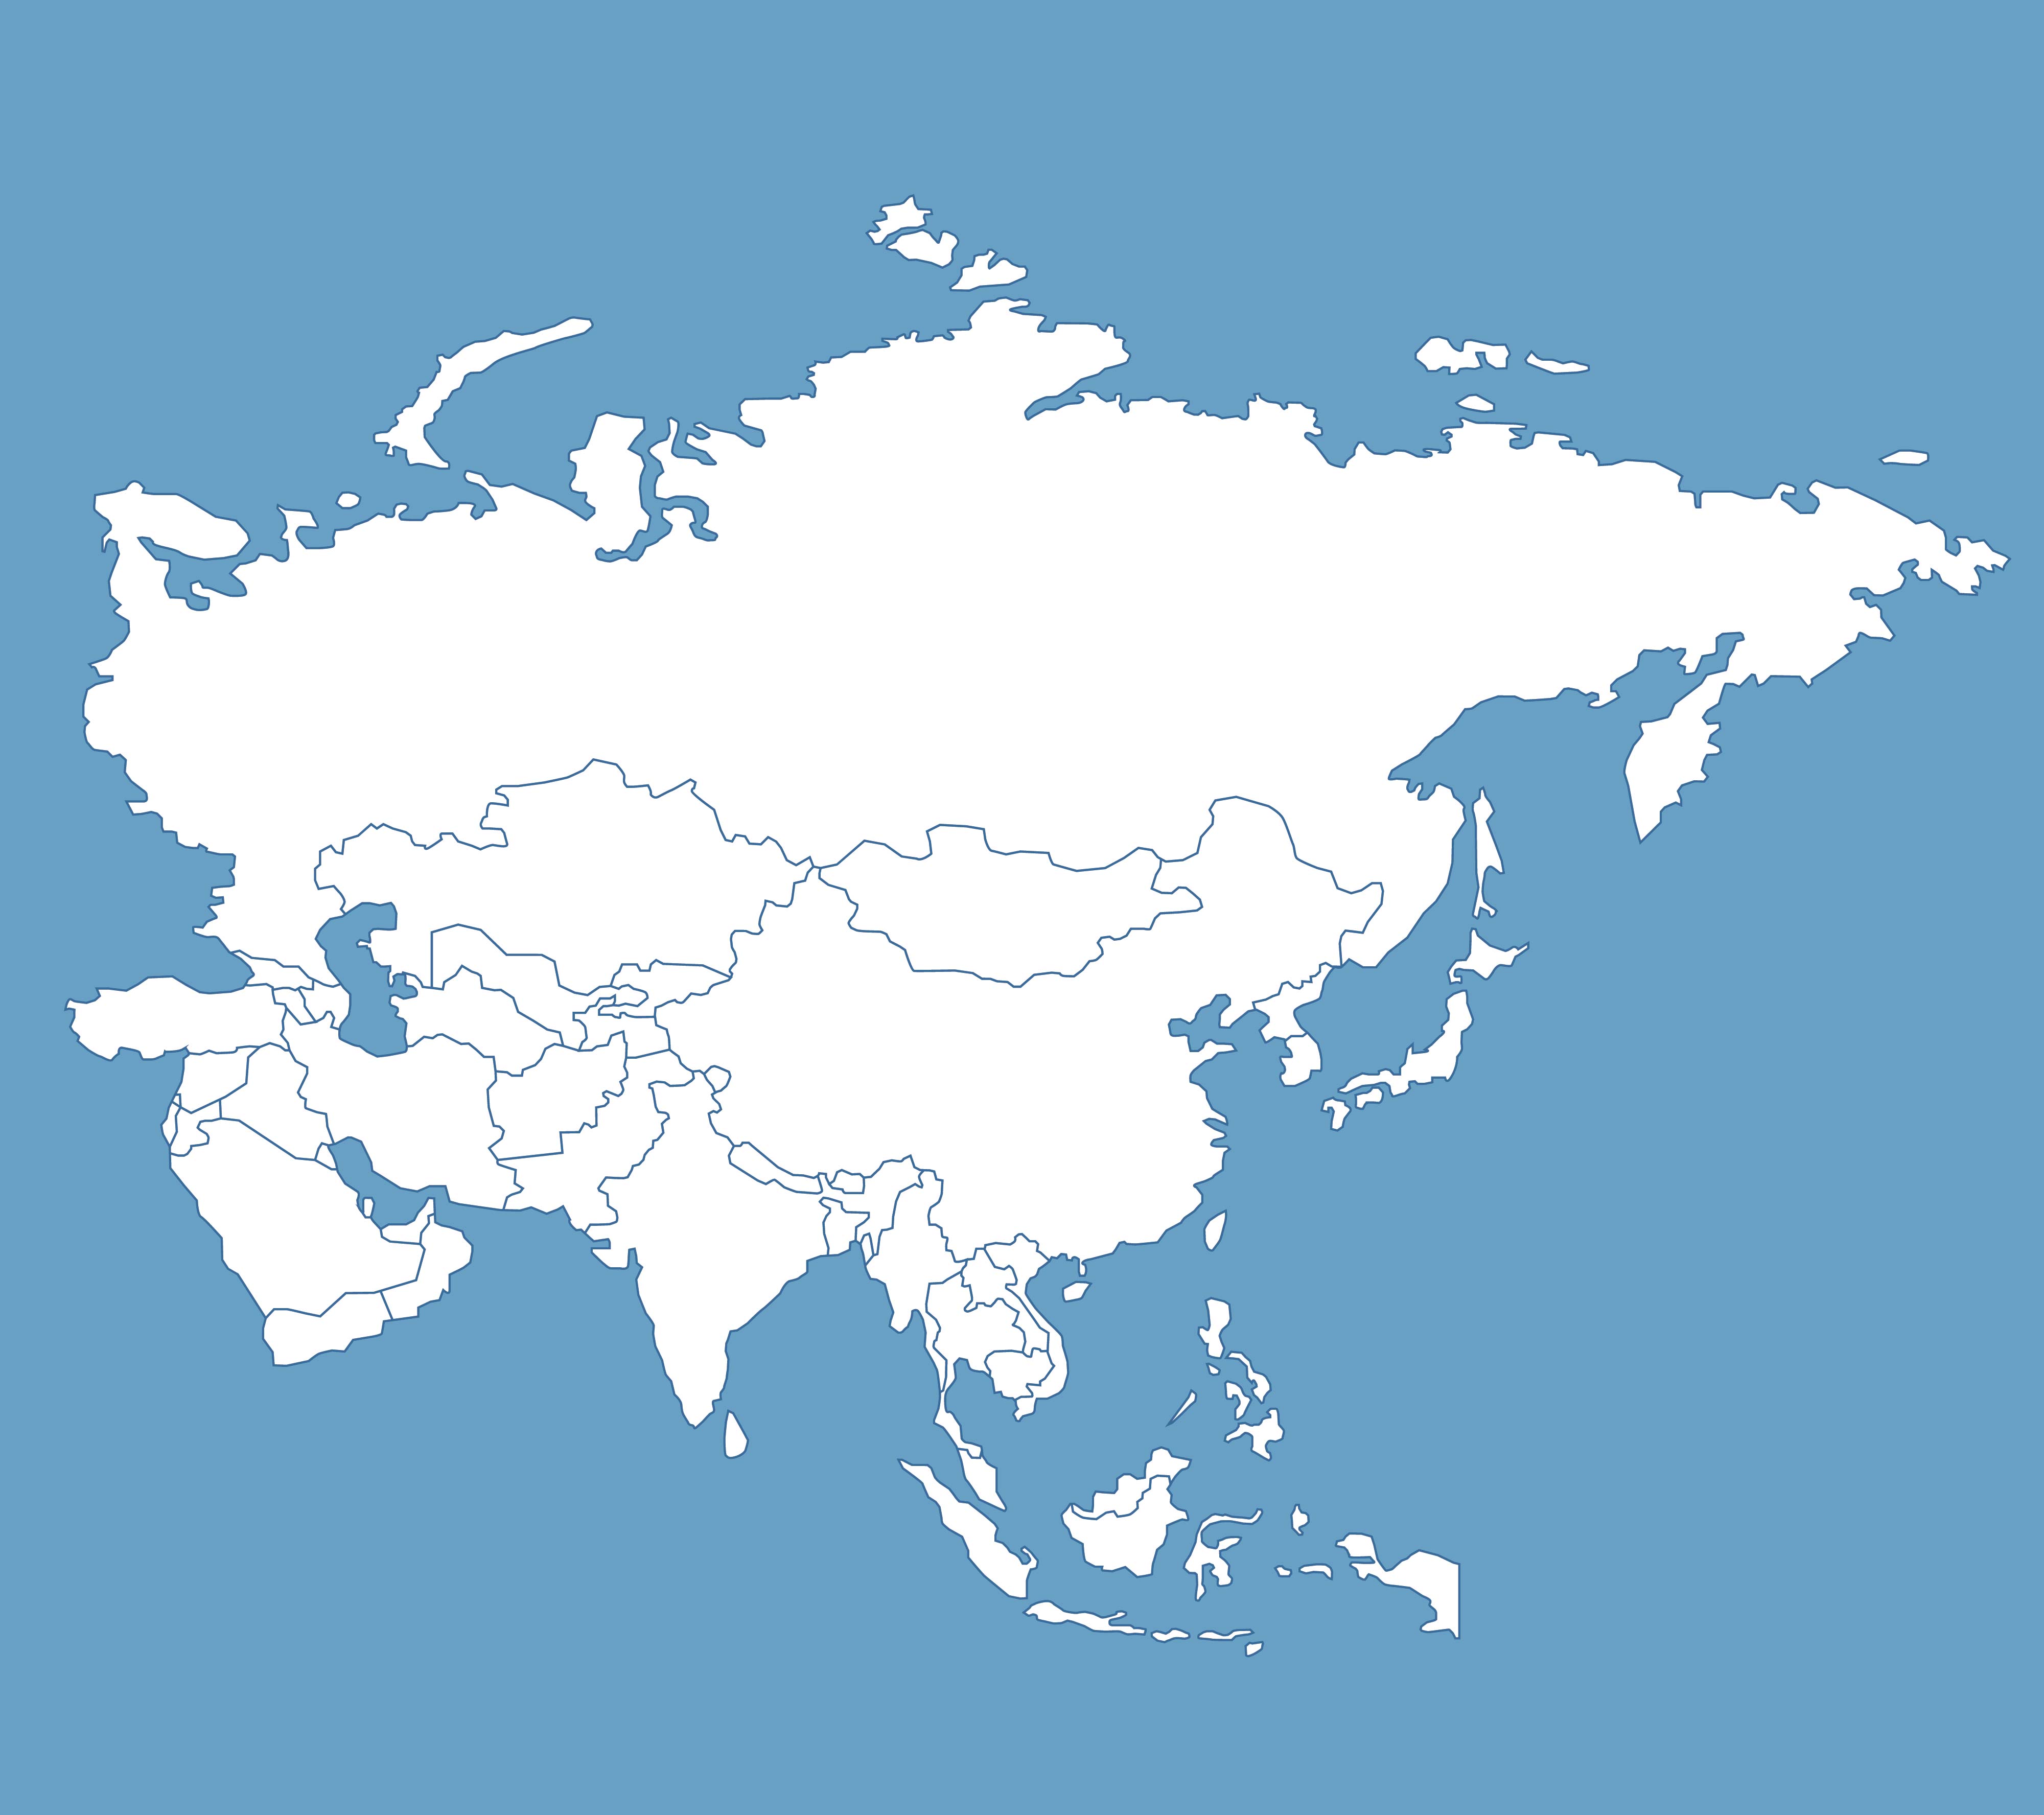 White asia. Карта Евразии белая с границами. Карта Азии белая. Карта Азии без флагов. Карта Азии белая с границами.